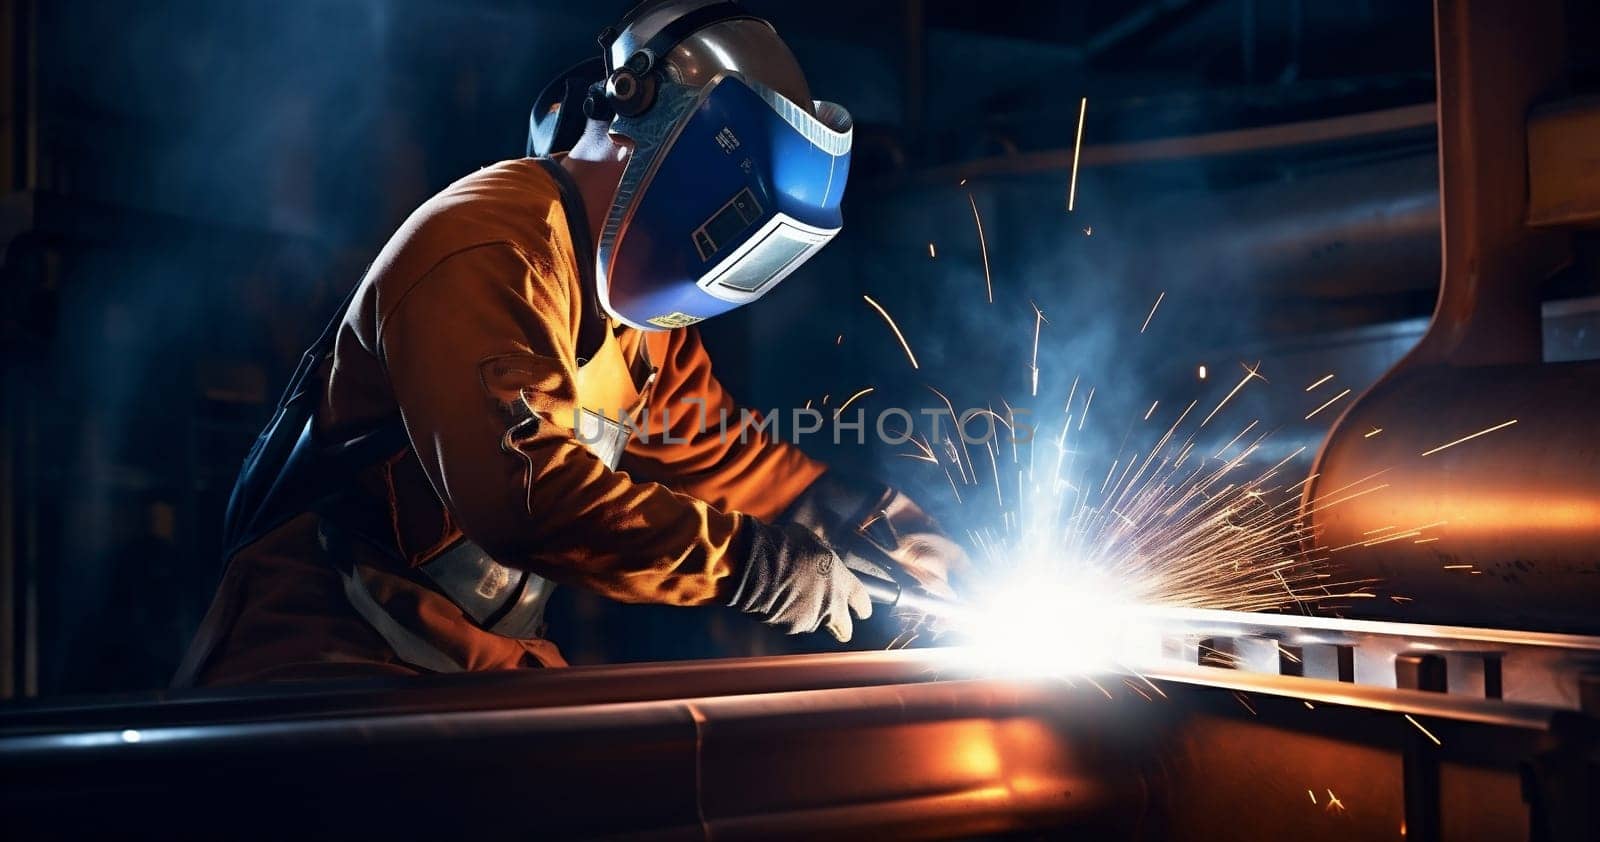 Safety working welder skill manufacturing engineering equipment job steel industrial worker men spark metal welding construction protection smoke factory light mask